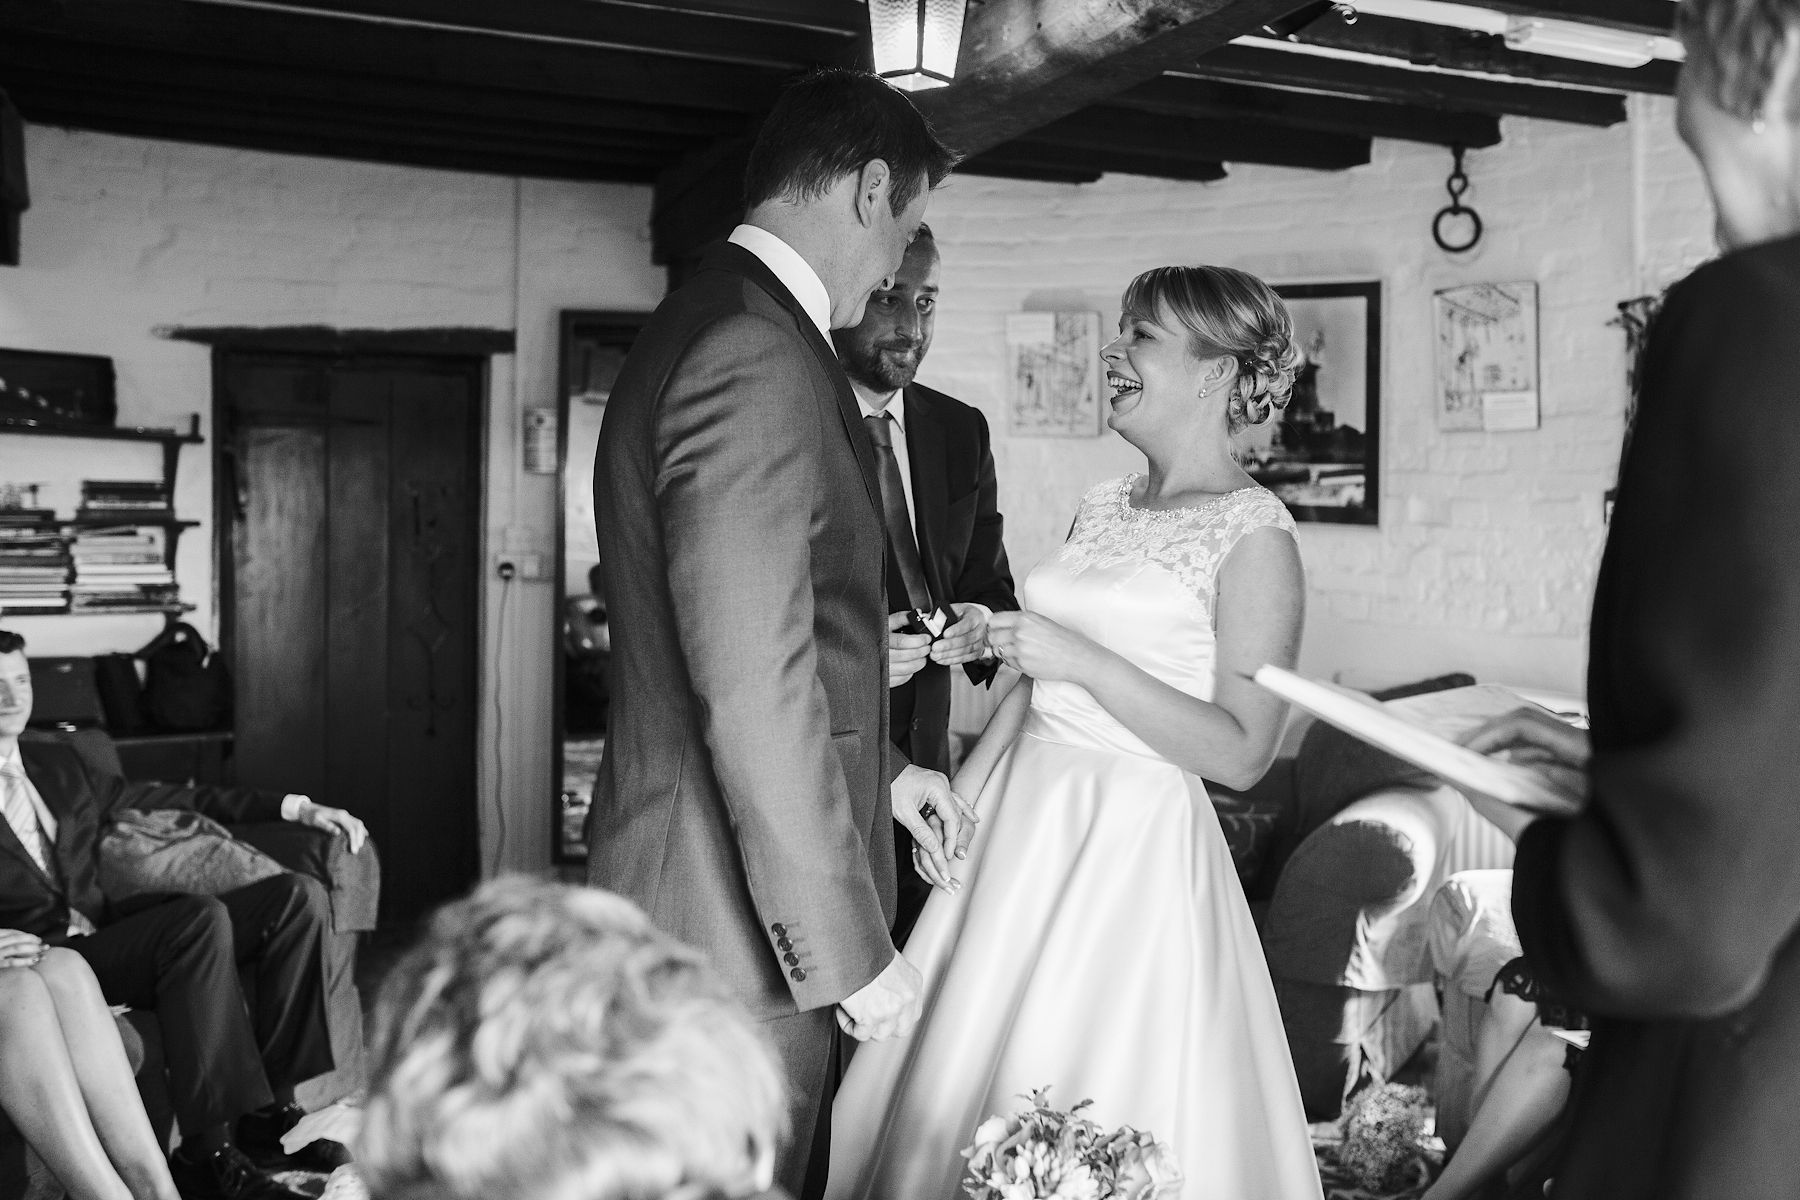 Cley windmill_North Norfolk, Norwich_wedding photography_small intimate wedding venues_windmill wedding_seaside wedding (11)